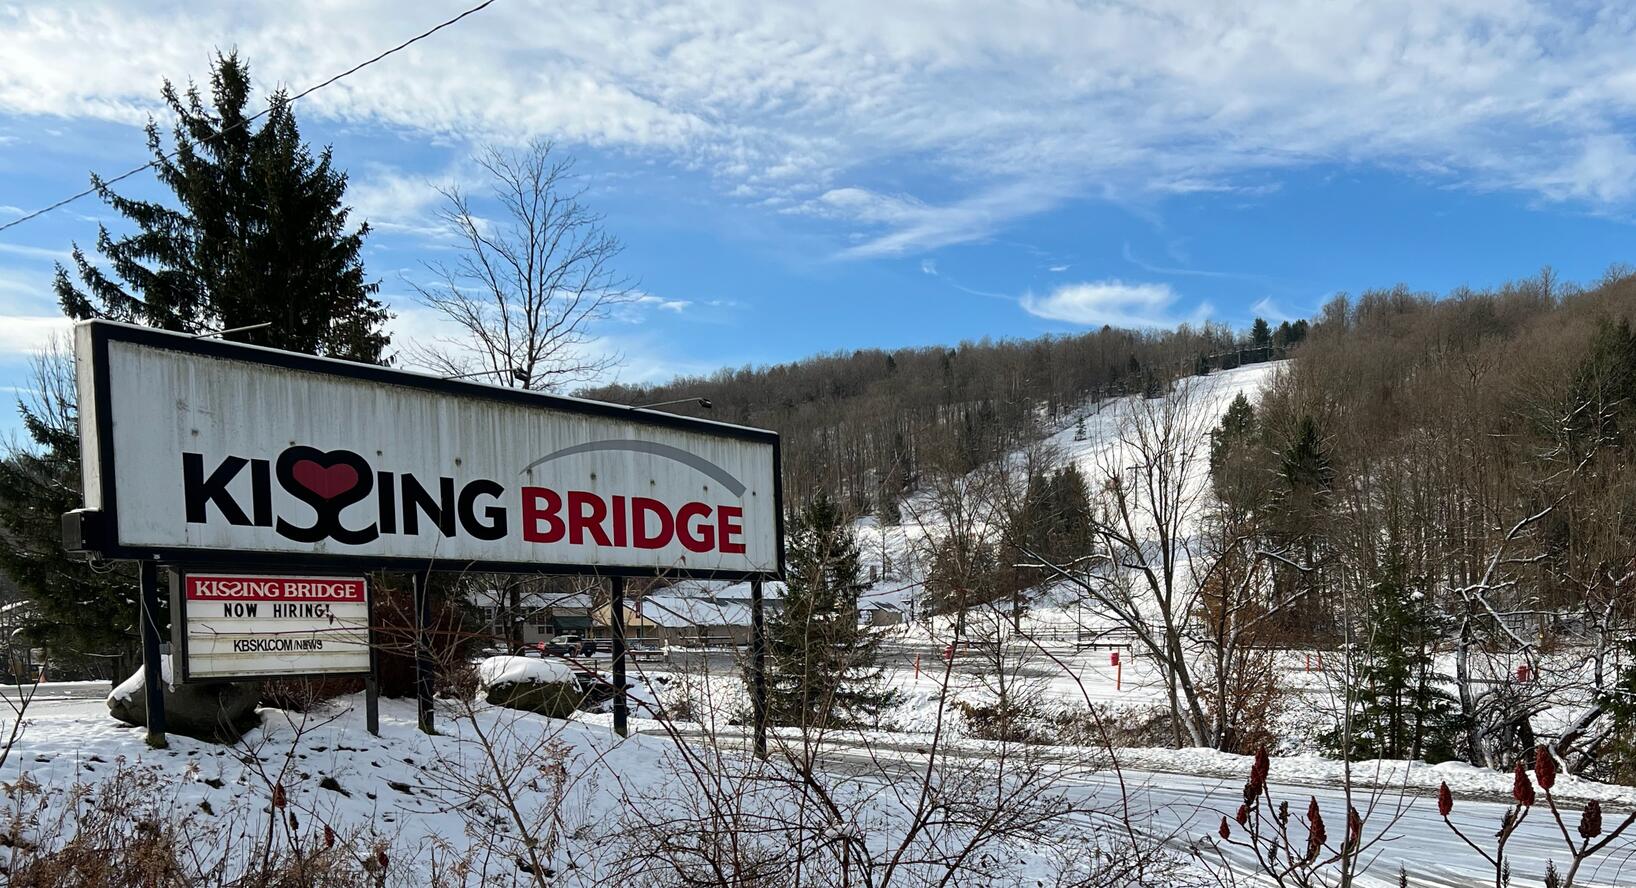 kissing bridge sign and slopes